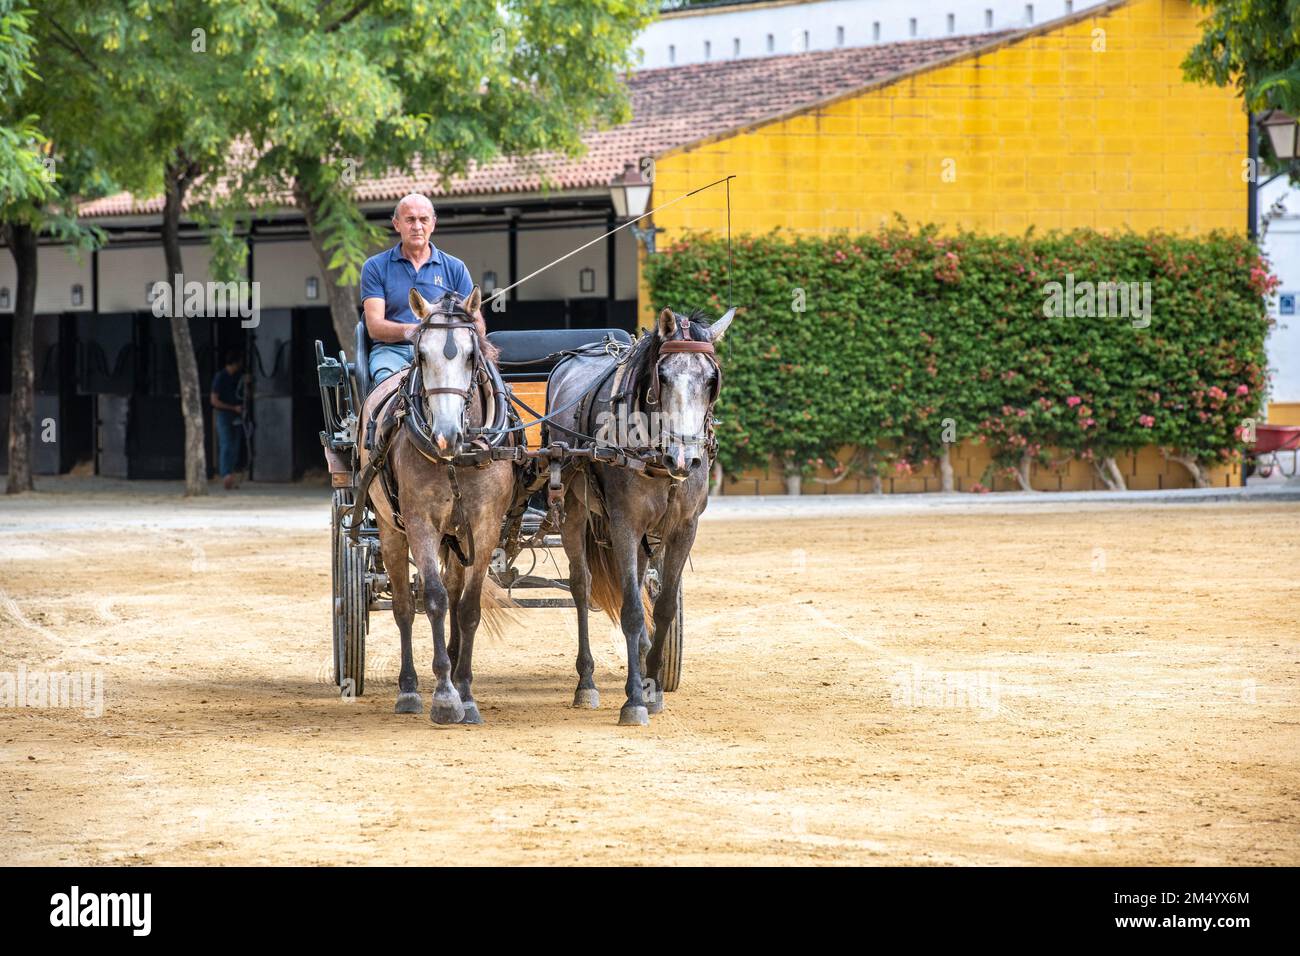 Hombre montando carruaje con caballo en la granja de caballos de caballos andaluces Jerez de la Frontera, España Foto de stock